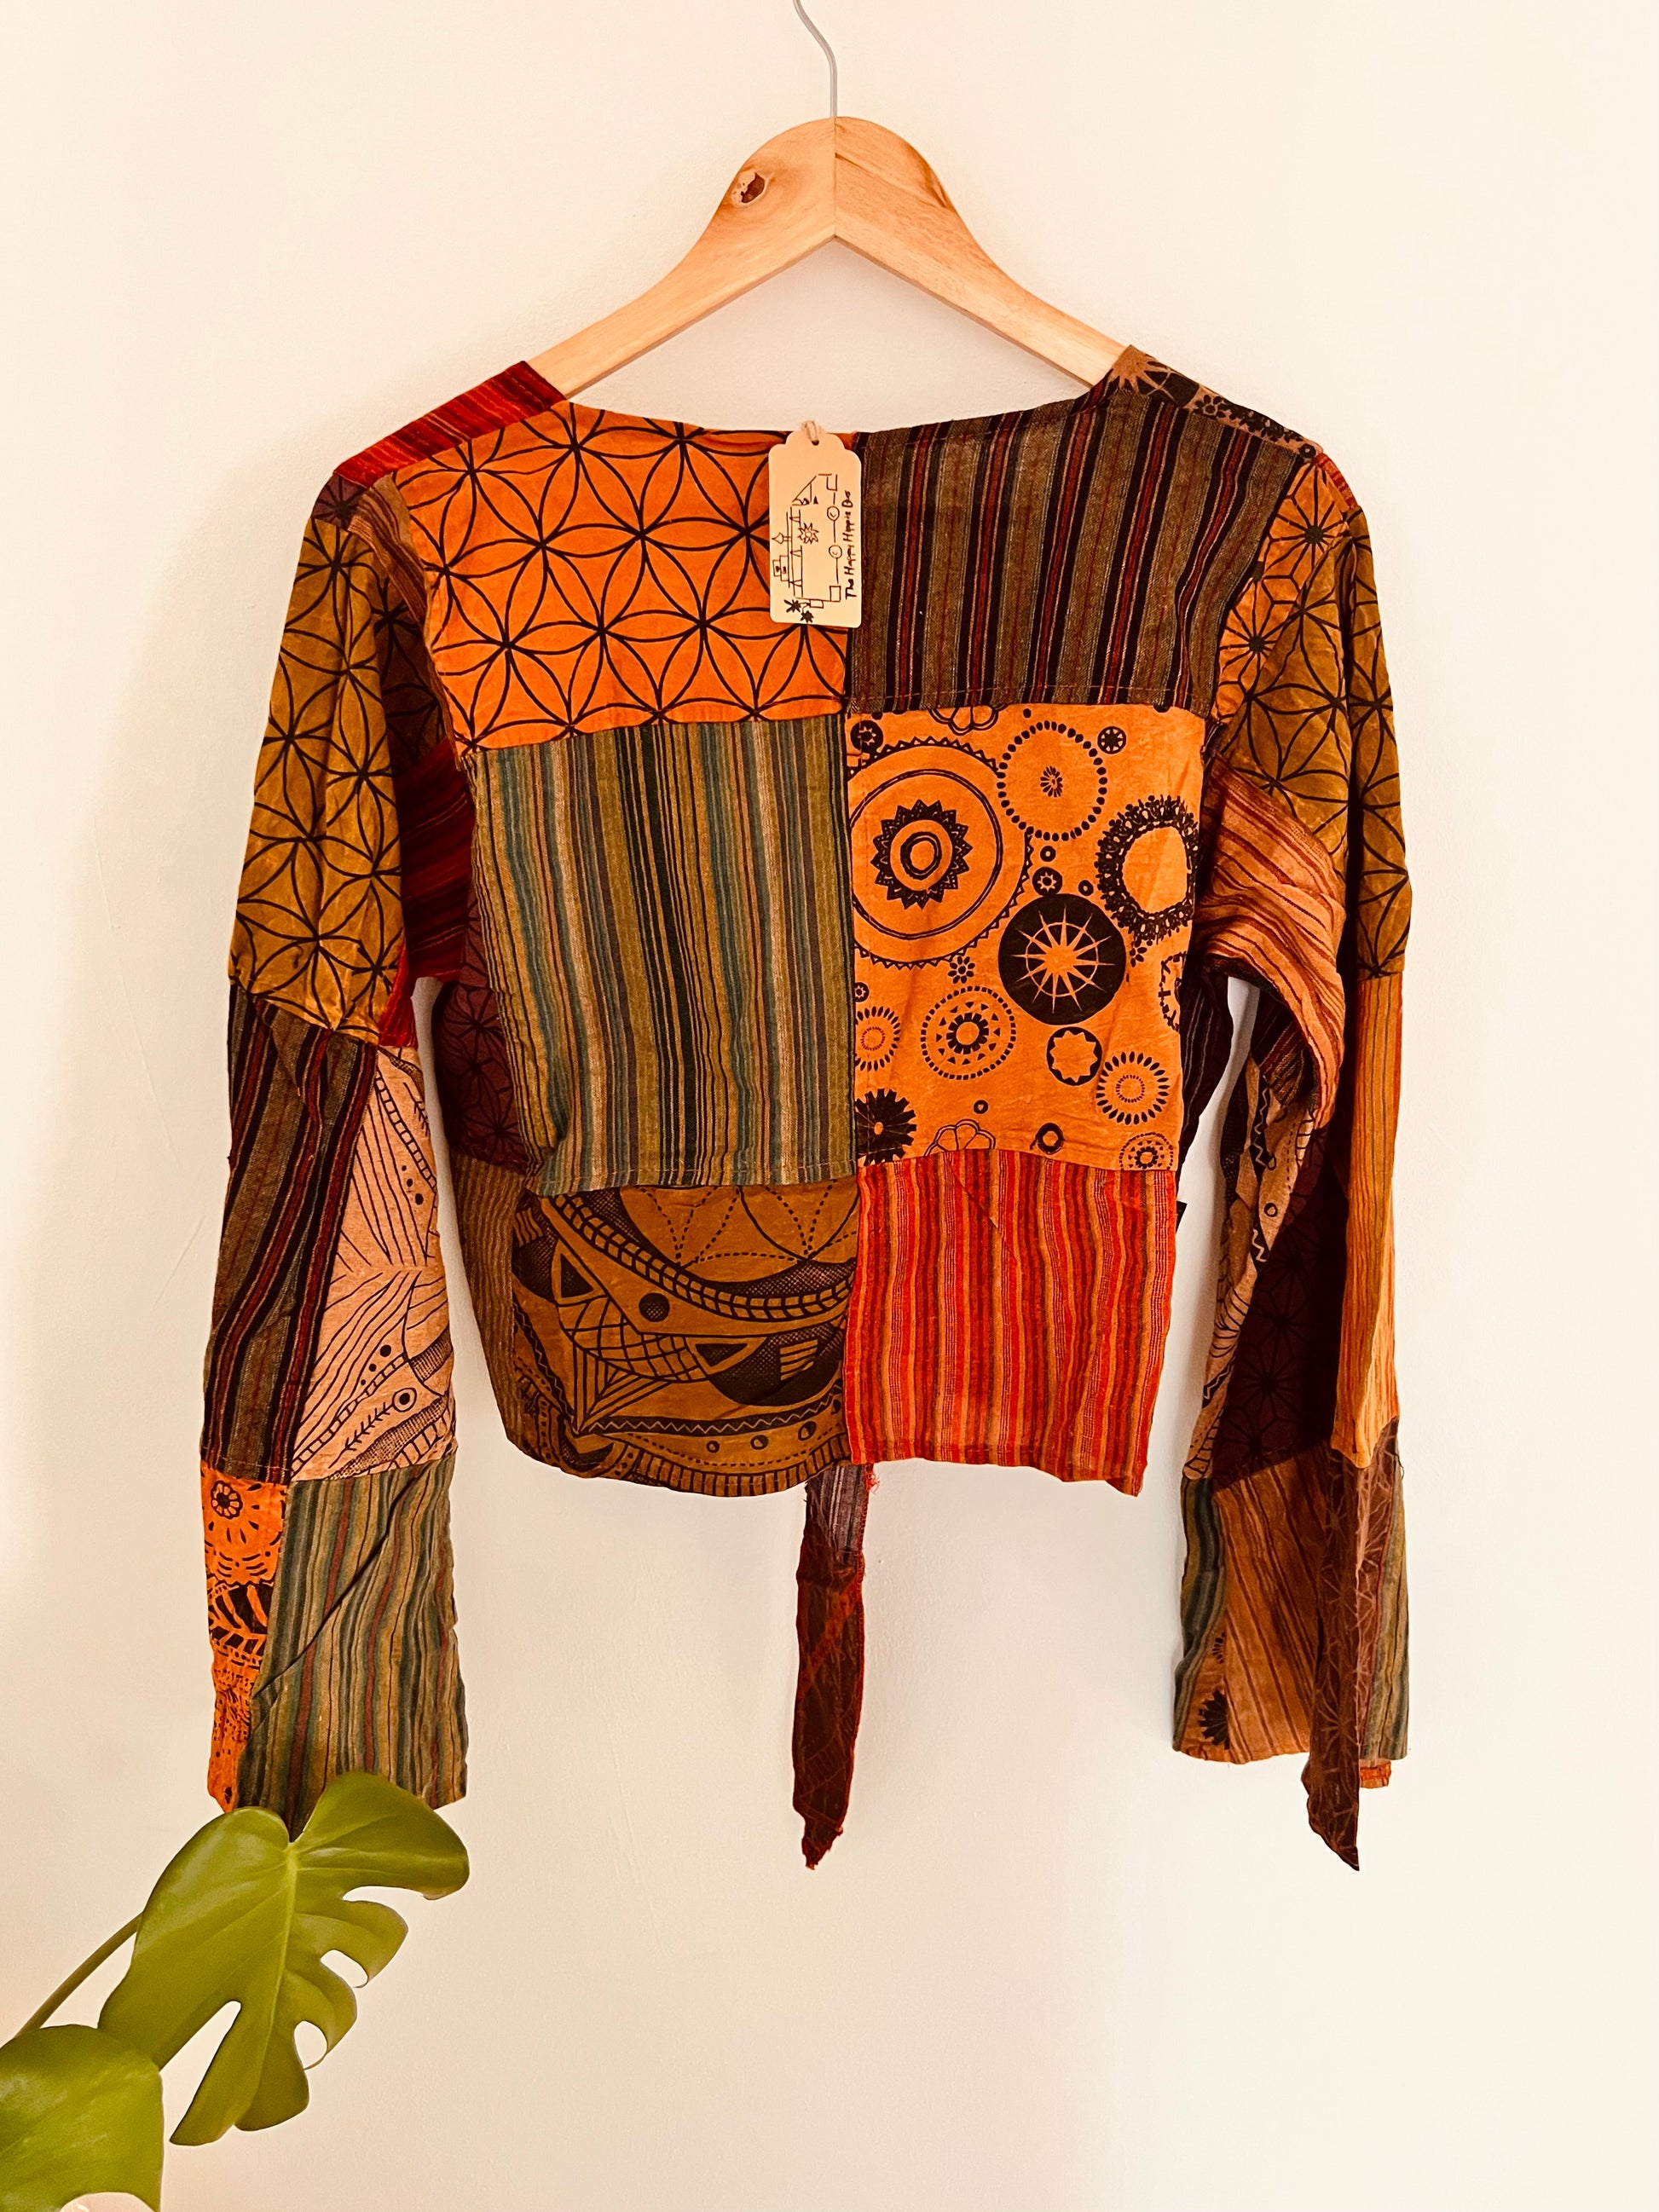 Handmade fair trade hippie boho women’s wrap cropped top trumpet bell sleeves